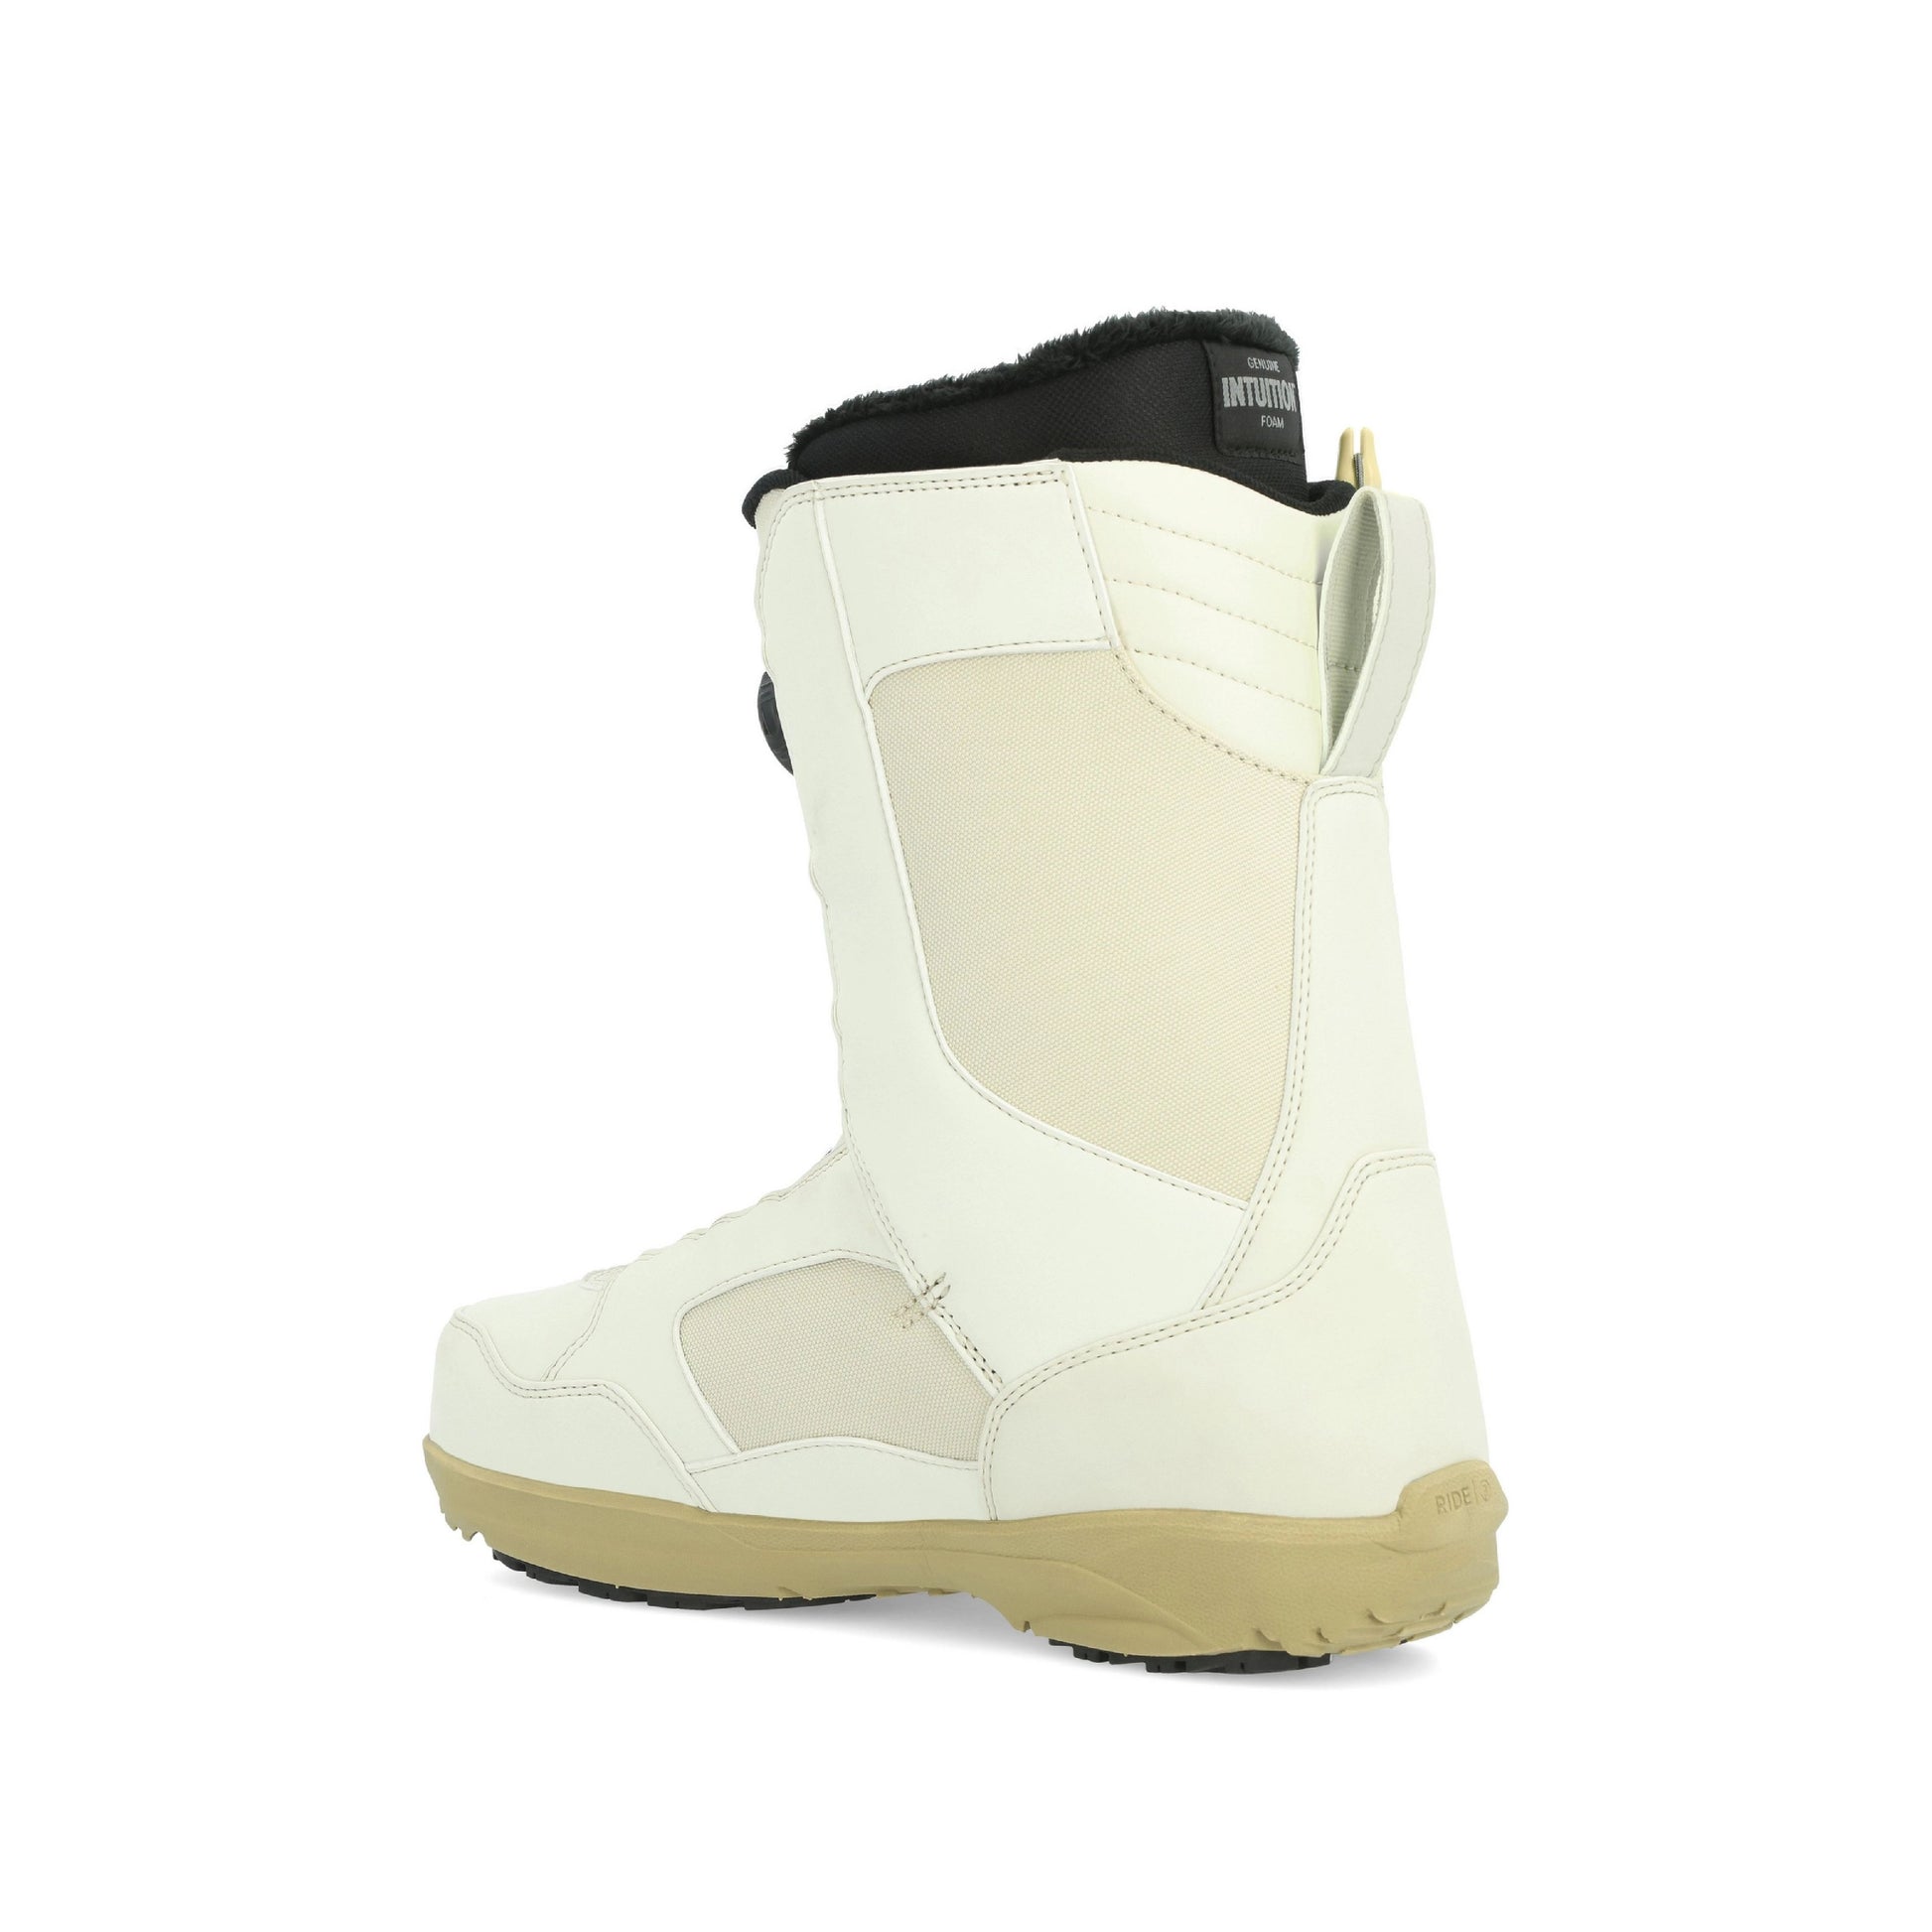 Ride Jackson Snowboard Boots Tan Snowboard Boots